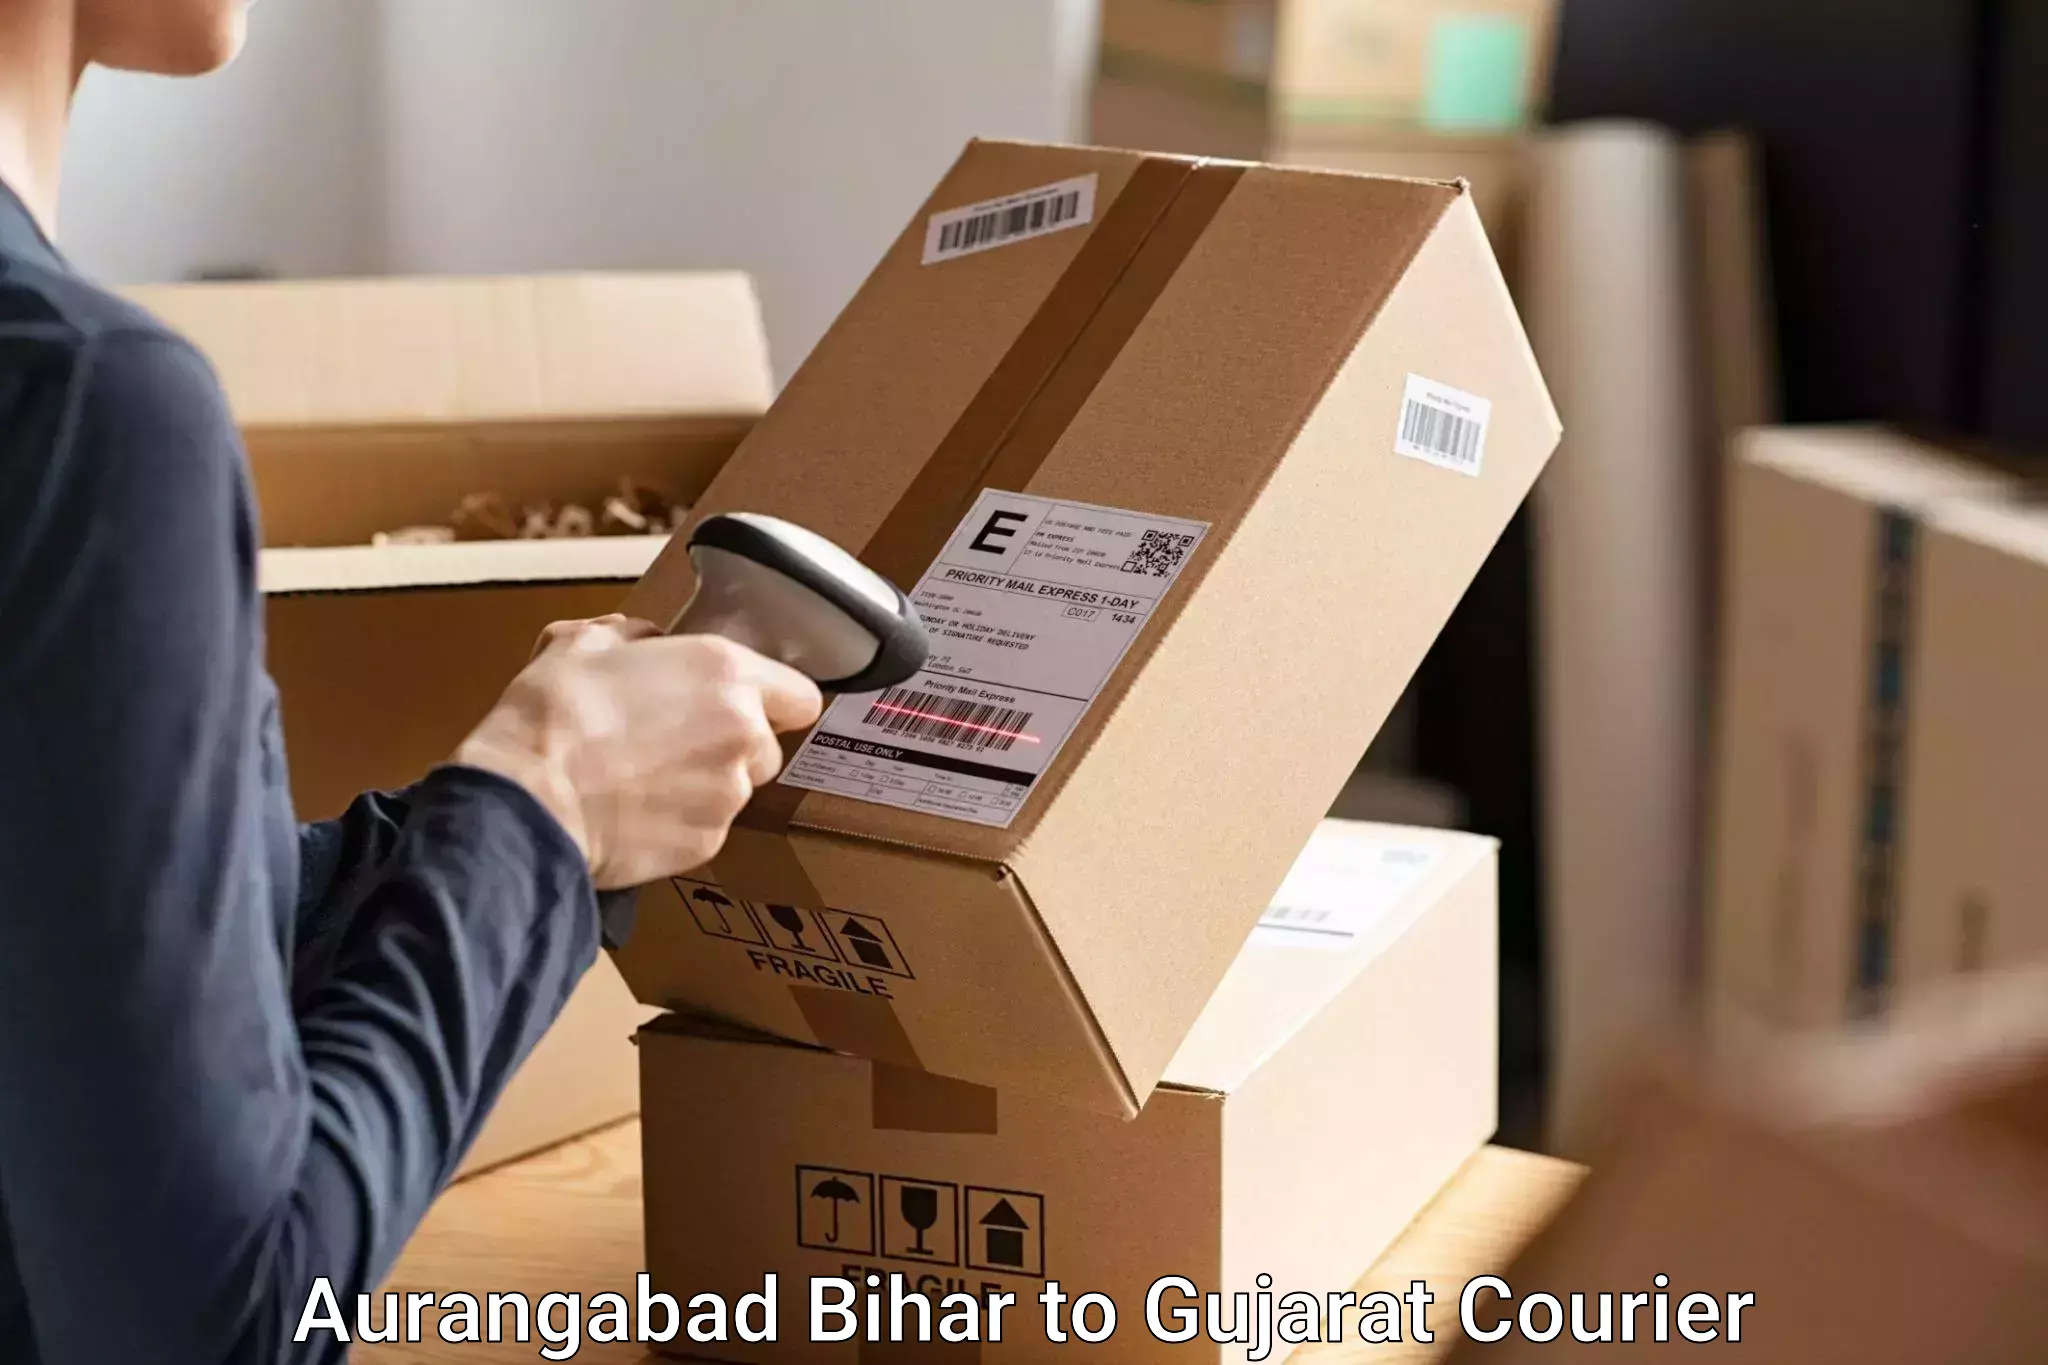 Baggage transport professionals Aurangabad Bihar to Balasinor